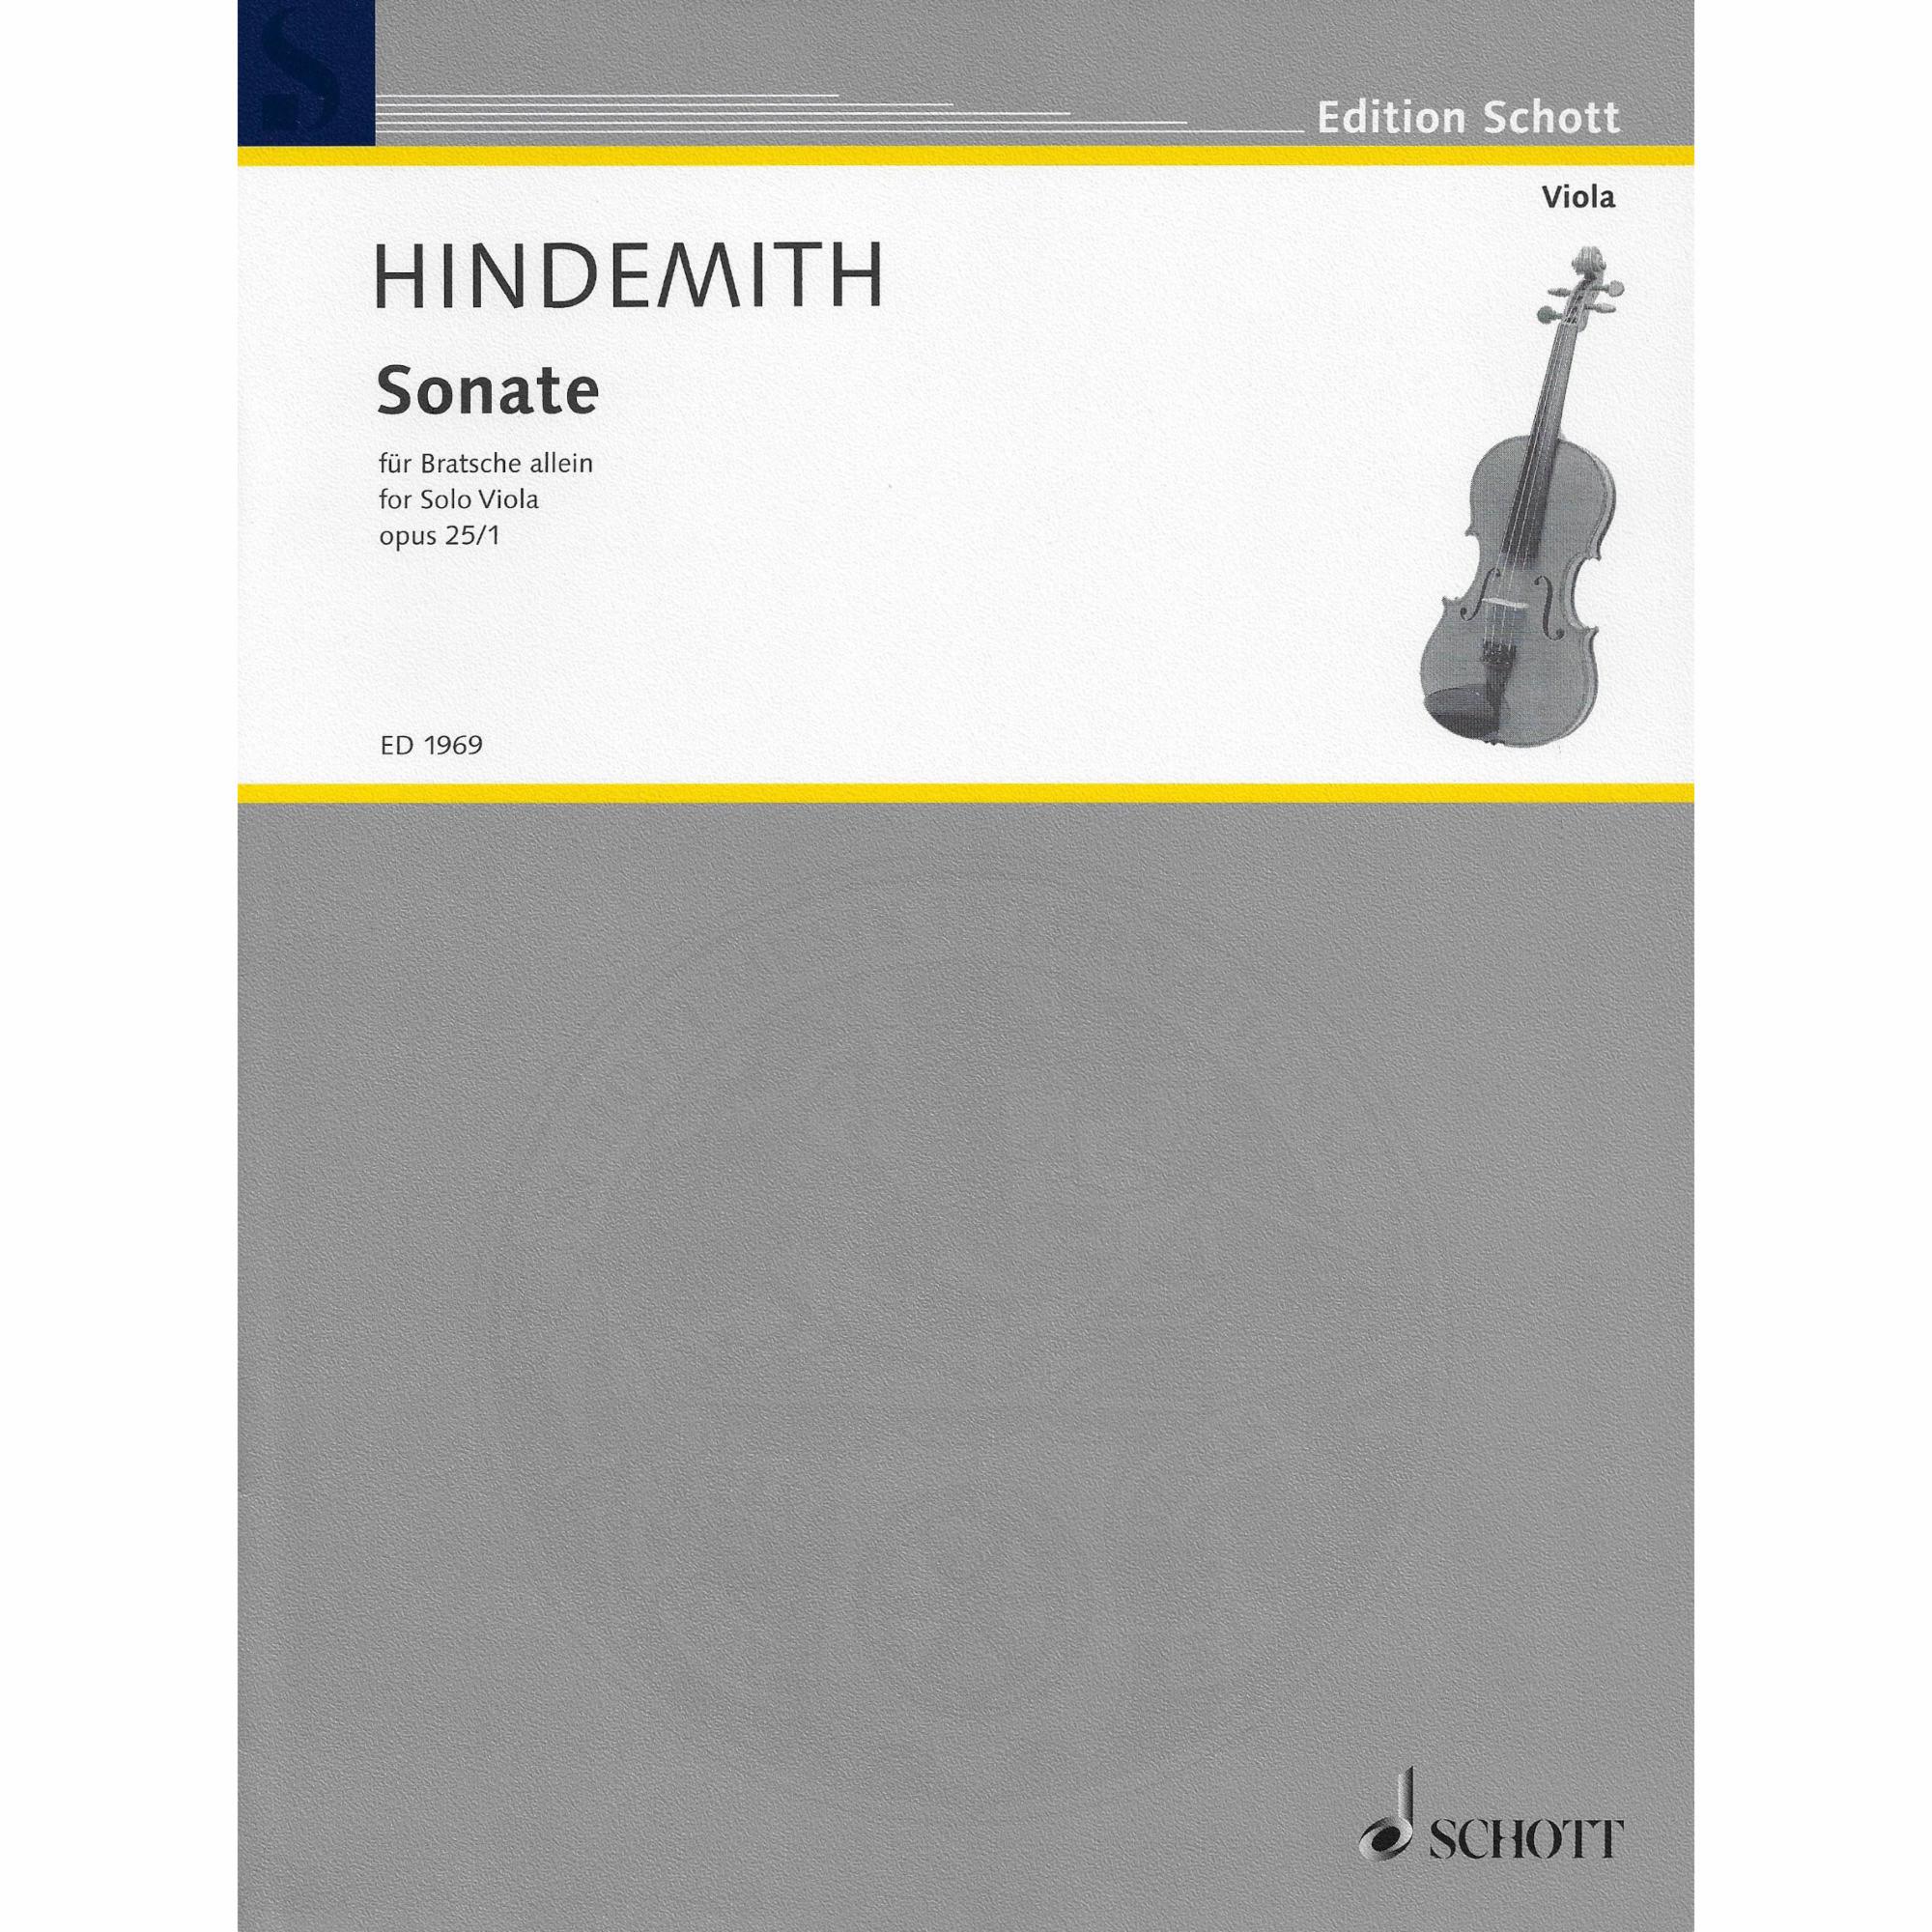 Hindemith -- Sonata, Op. 25/1 for Solo Viola